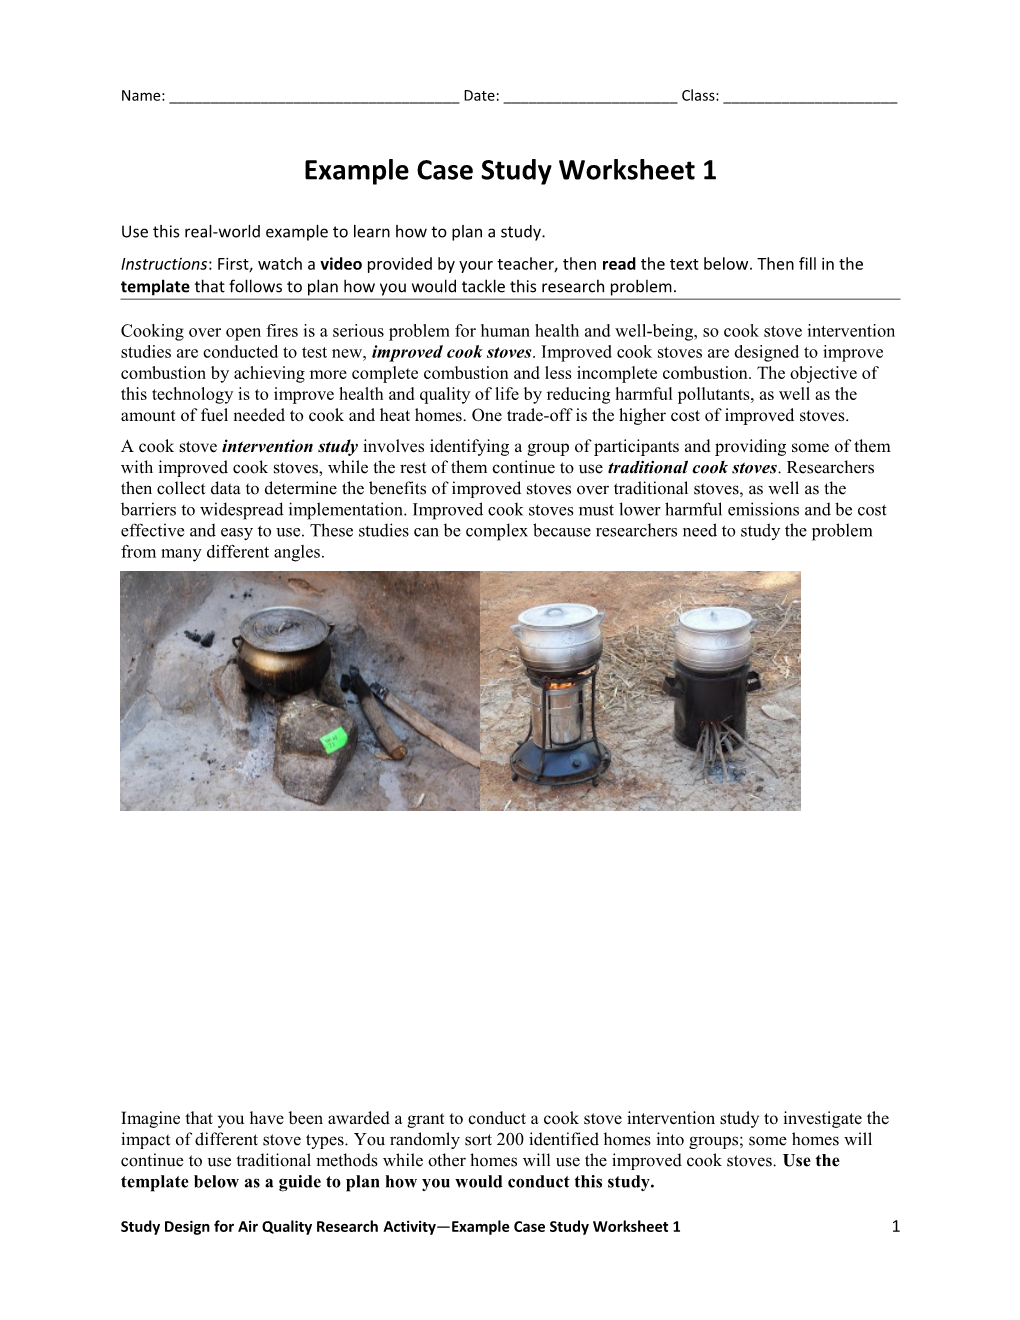 Example Case Study Worksheet 1